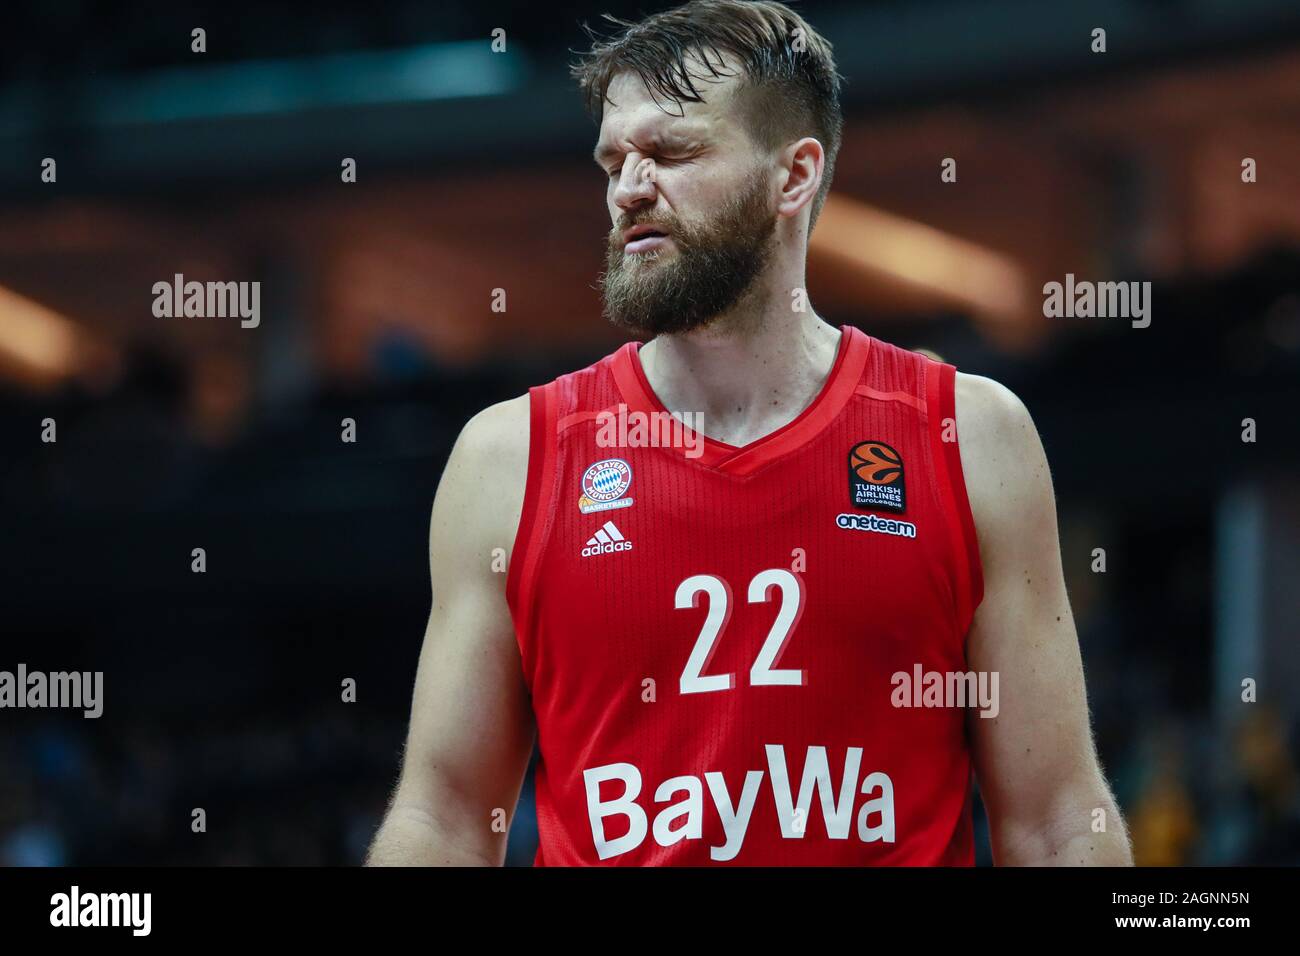 Berlin, Germany, December 18, 2019:Danilo Barthel of FC Bayern Munich Basketball during the EuroLeague basketball match Stock Photo